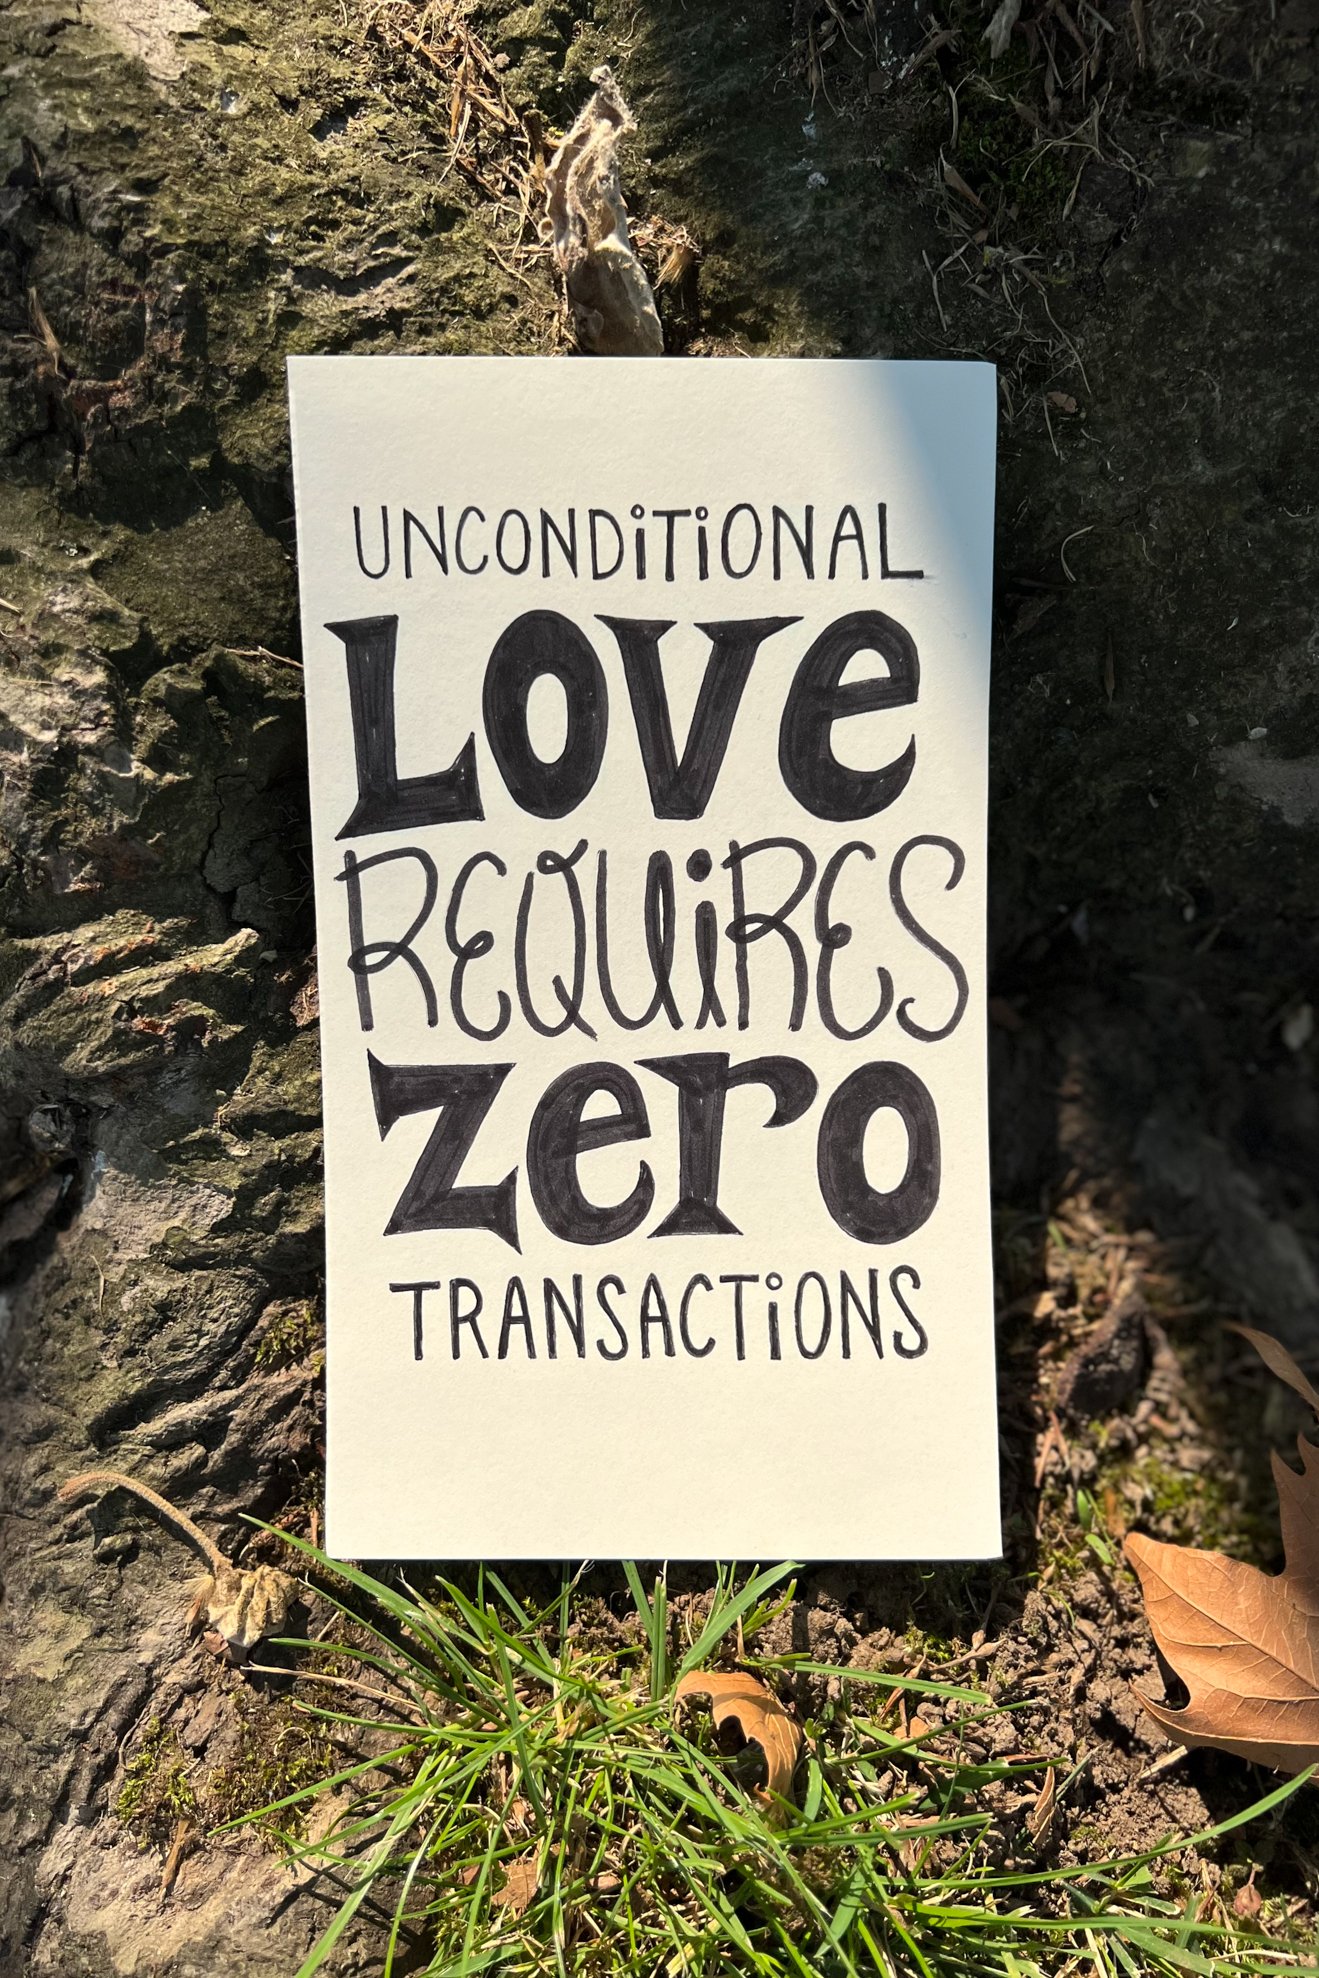 unconditional-love-requires-zero-transactions-mike-cabuco.jpg